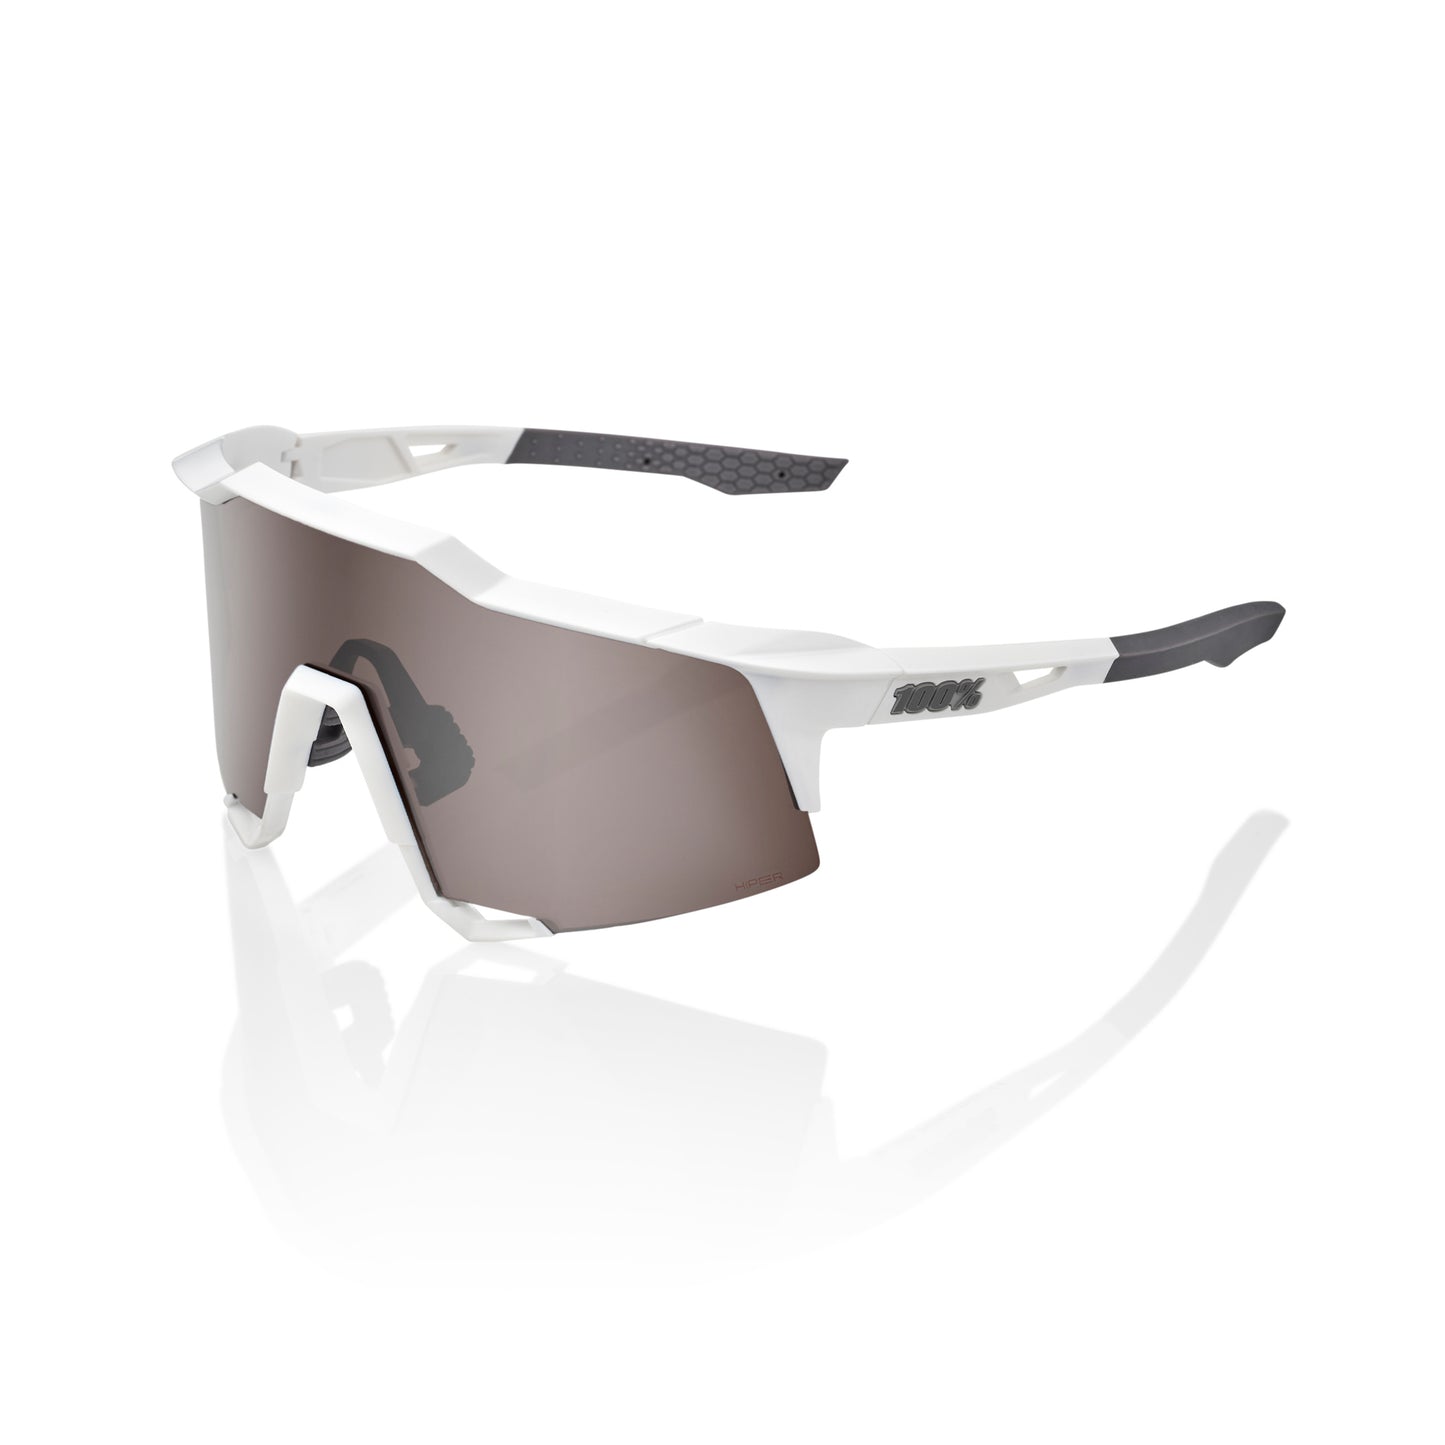 100 Percent Speedcraft Sunglasses - One Size Fits Most - Matte White - HiPER Silver Mirror Lens